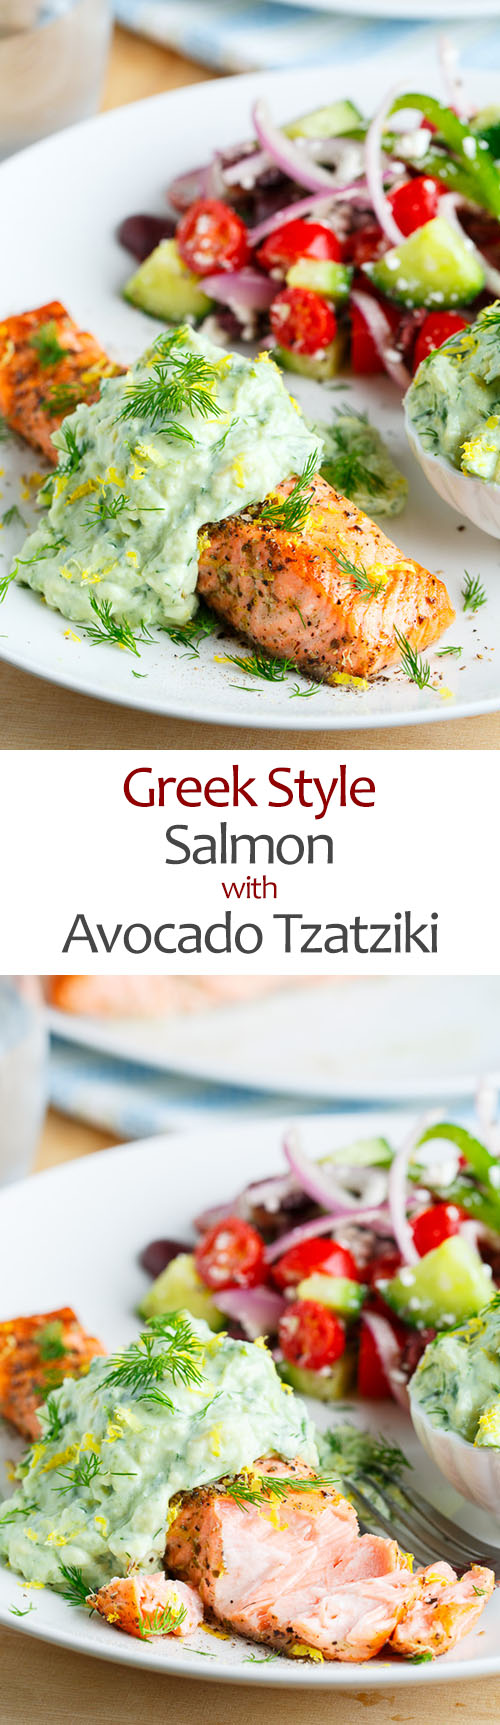 Greek Style Salmon with Avocado Tzatziki